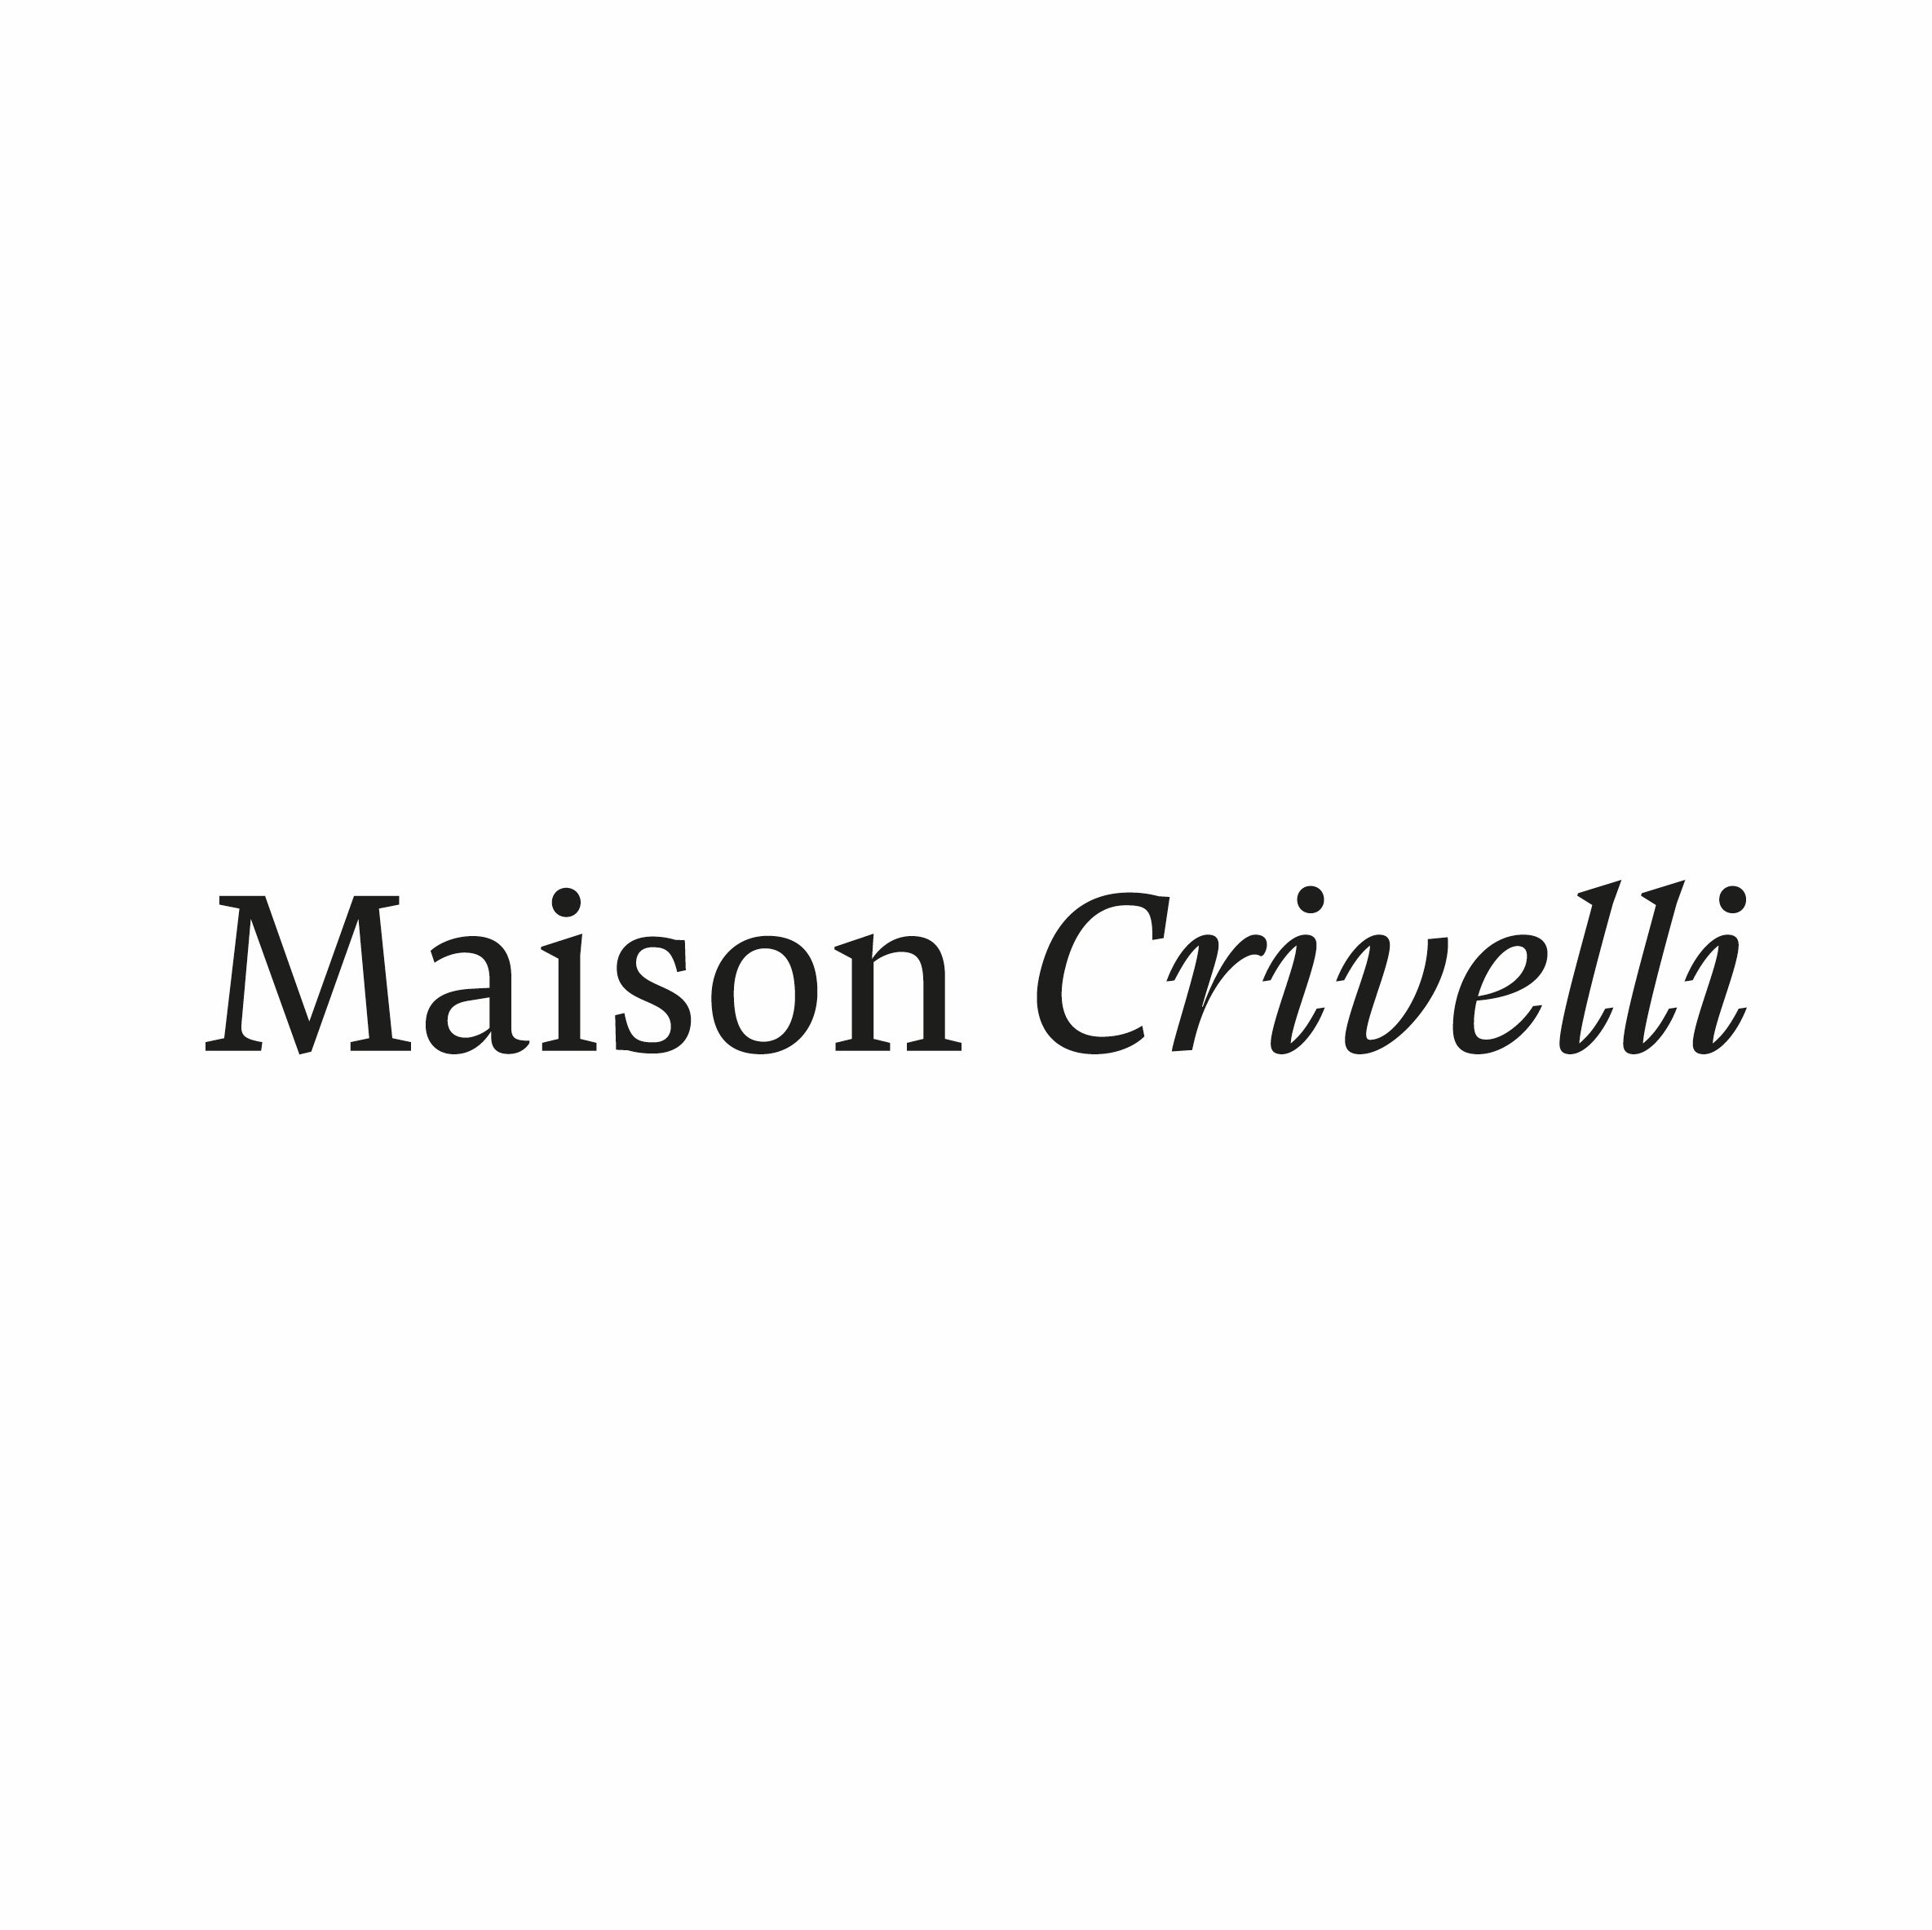 Maison Crivelli branding copy.jpg